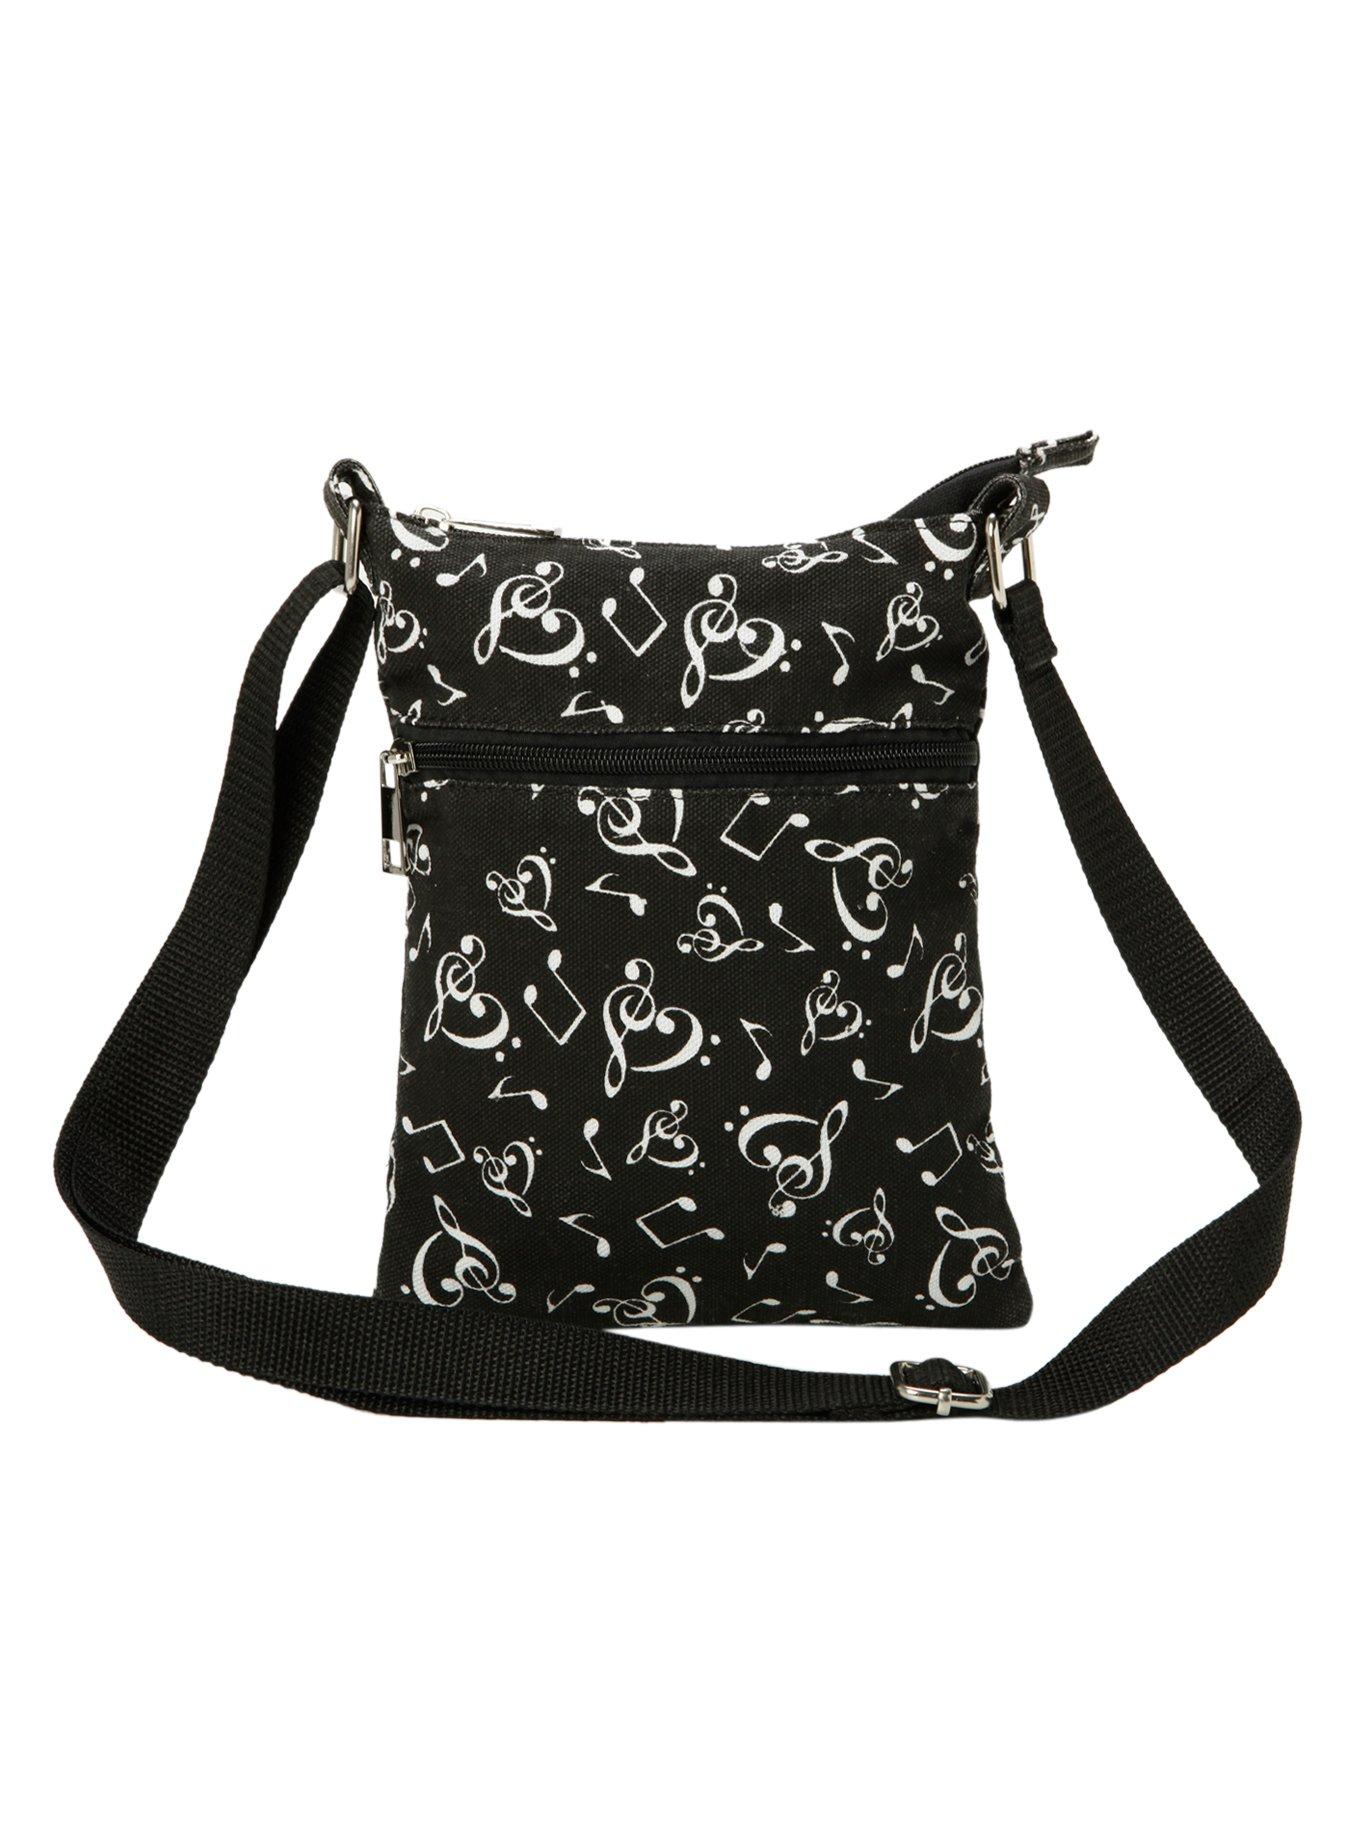 Black & White Clef & Music Note Crossbody Bag, , hi-res